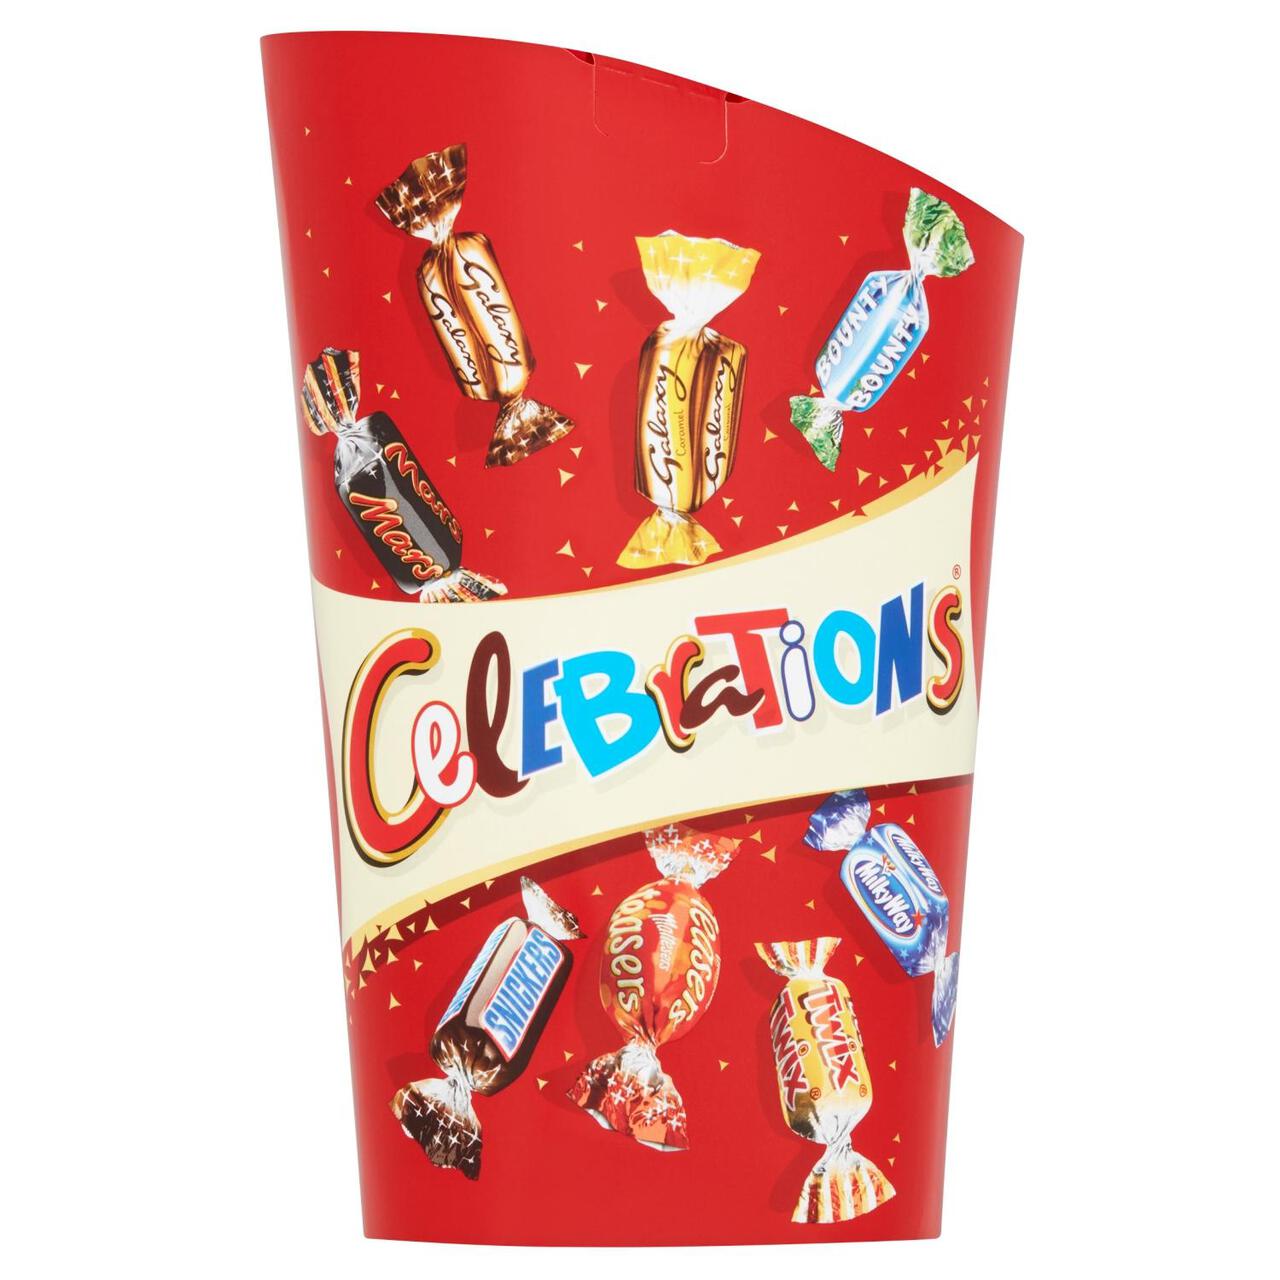 Celebrations Milk Chocolate Selection Box of Mixed Chocolates 380g